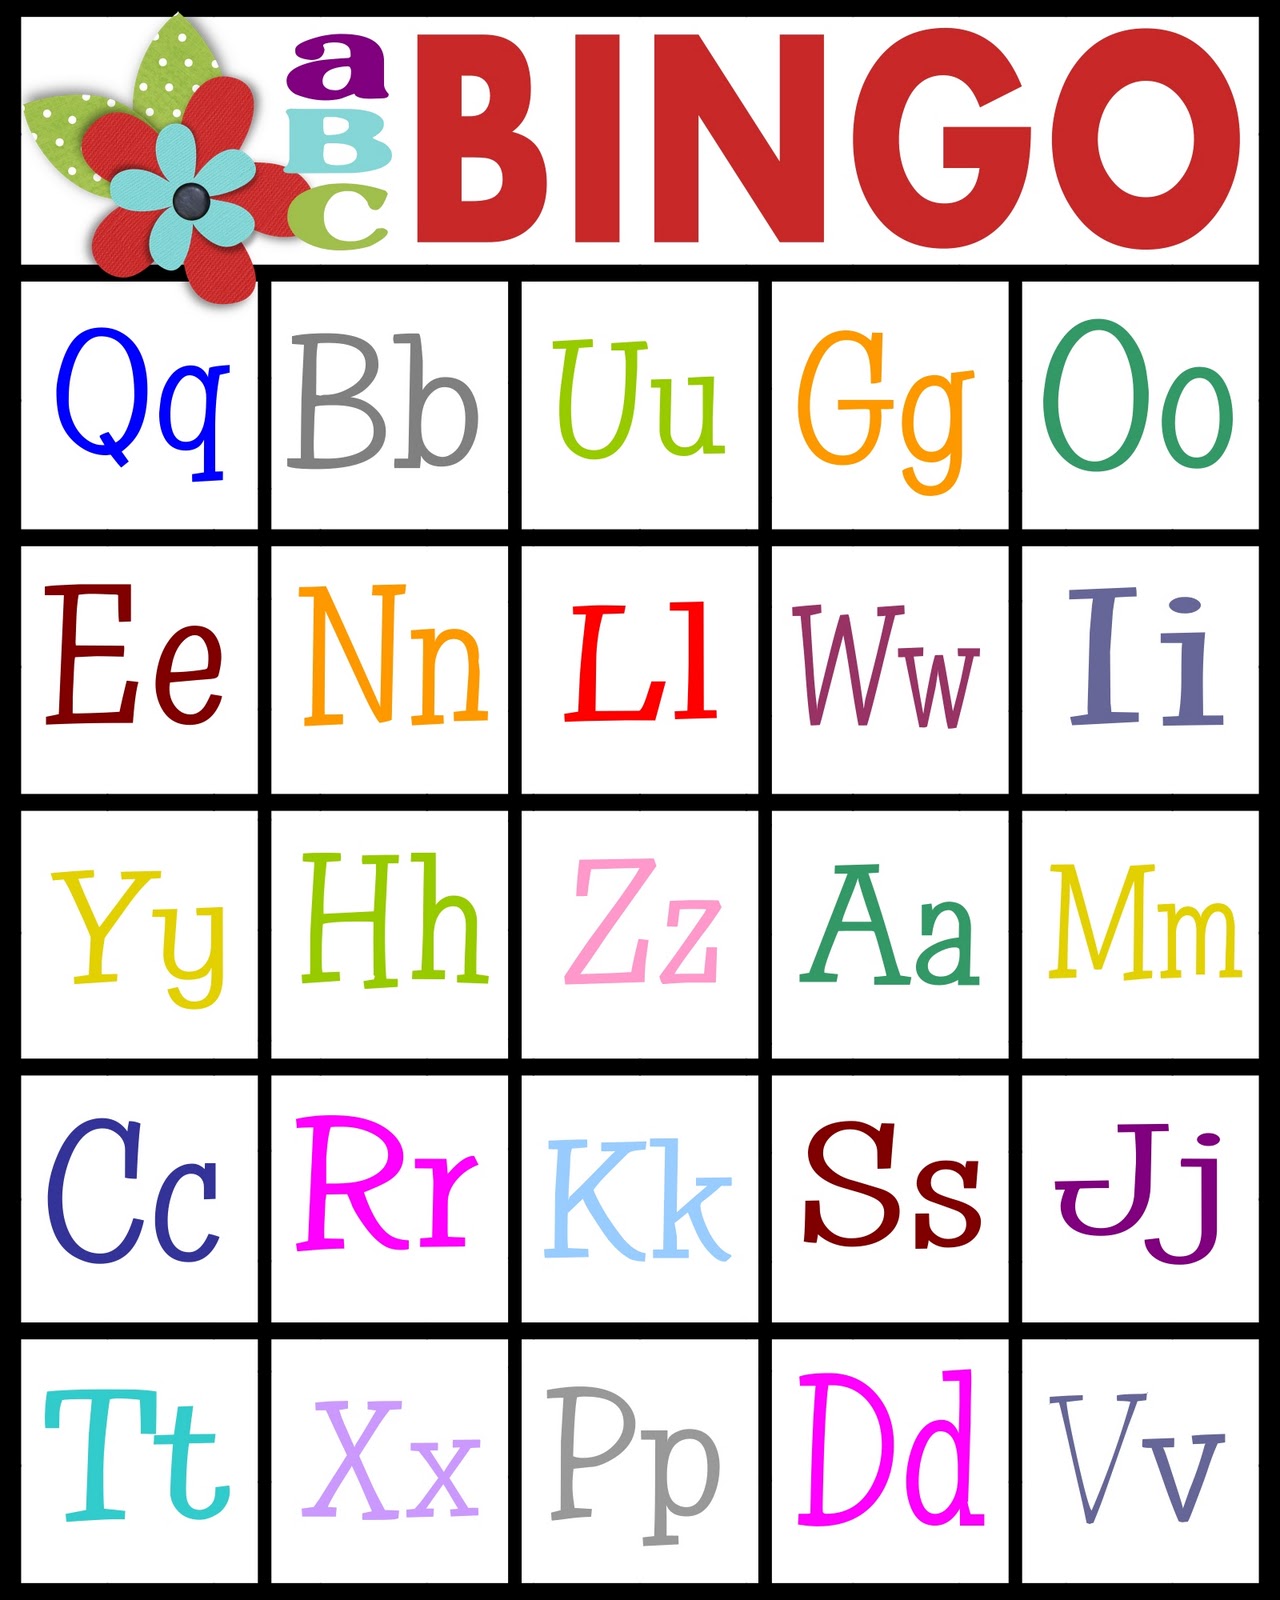 abc-bingo-4peatssake